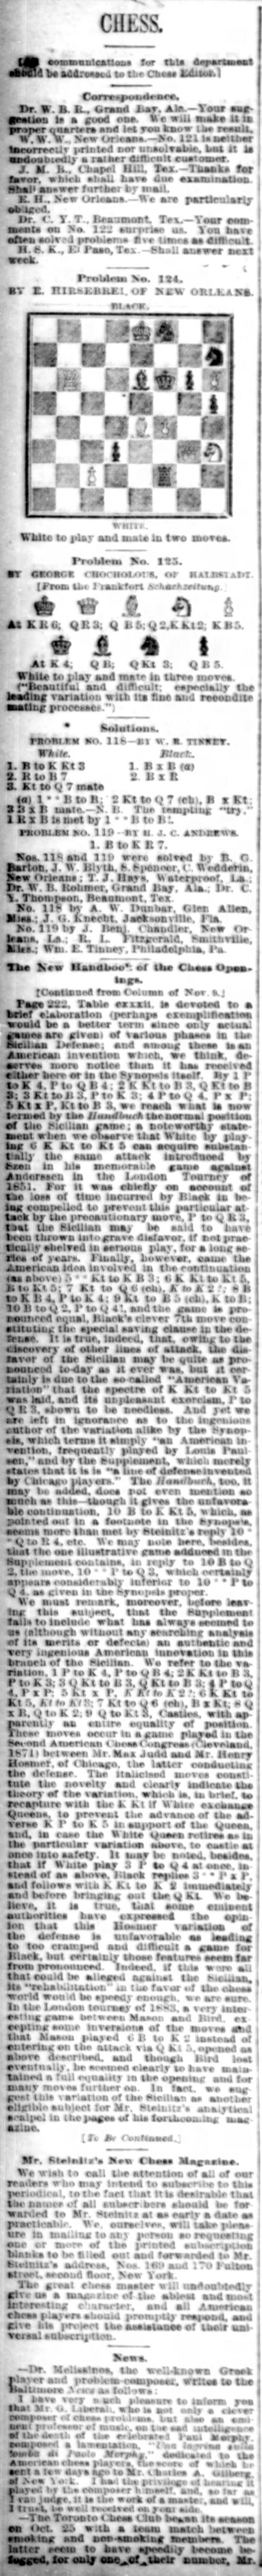 1884.11.16-01 New Orleans Times-Democrat.jpg